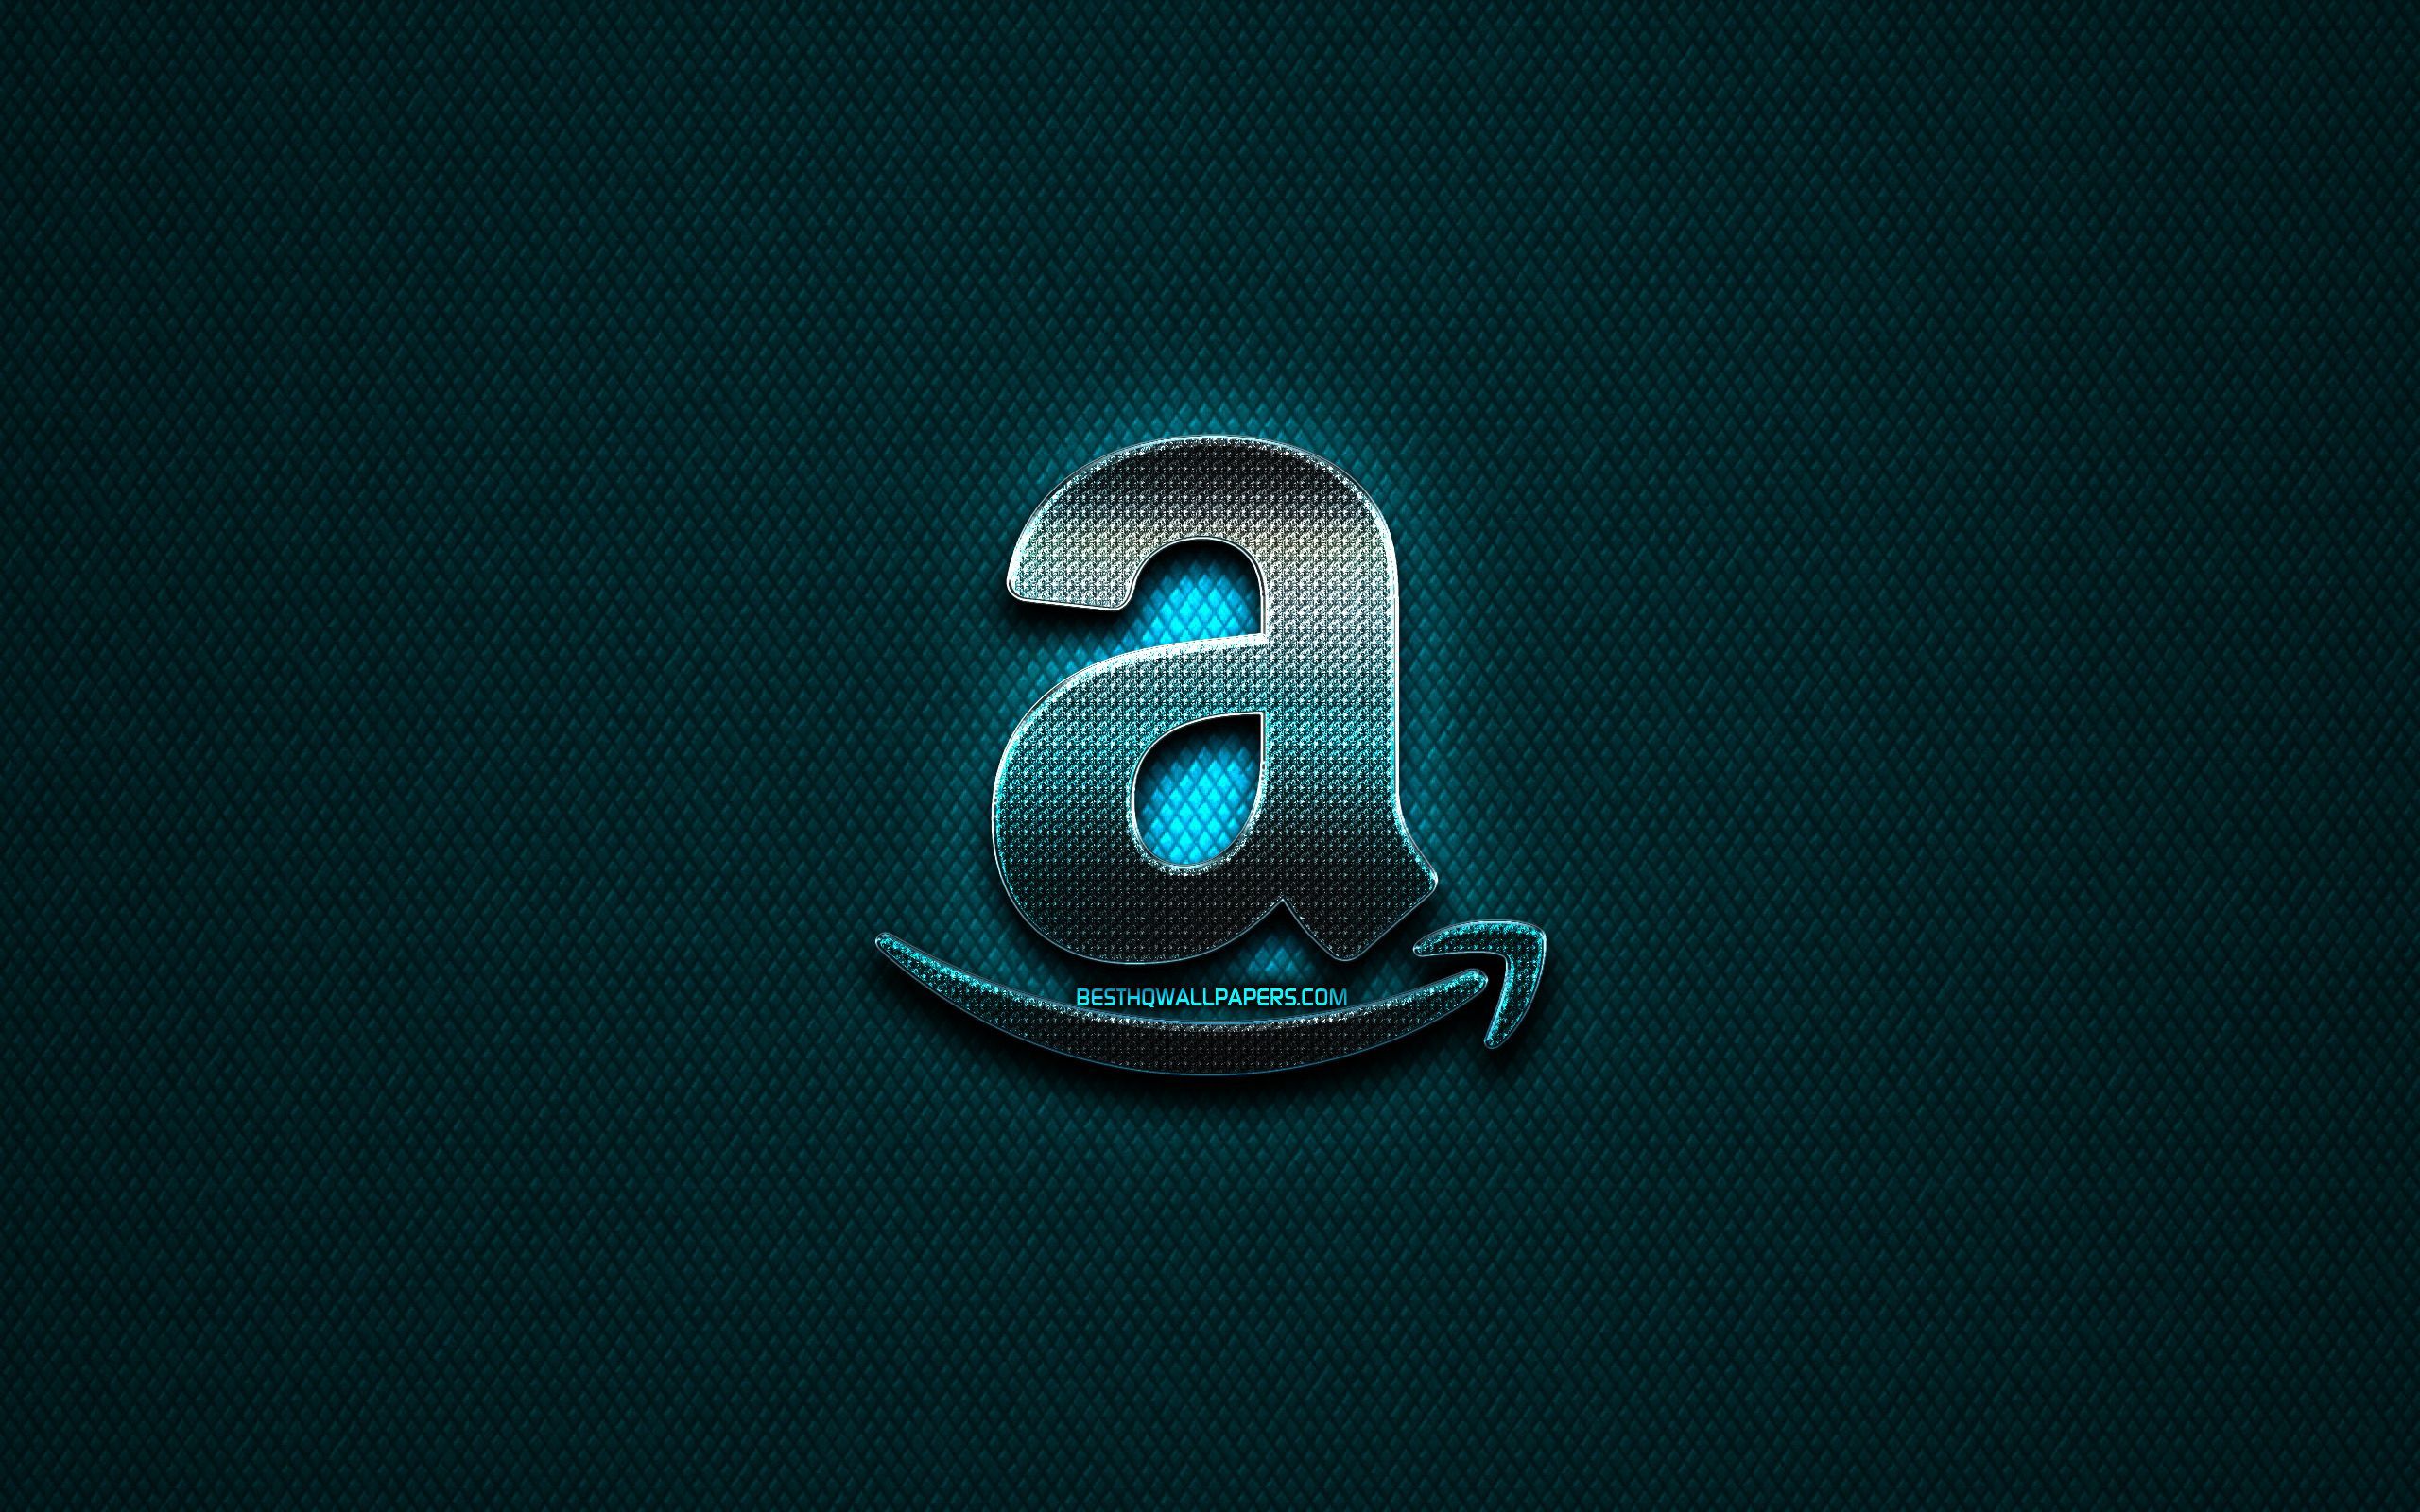  Amazon Hintergrundbild 2560x1600. Amazon Logo Wallpaper Free Amazon Logo Background